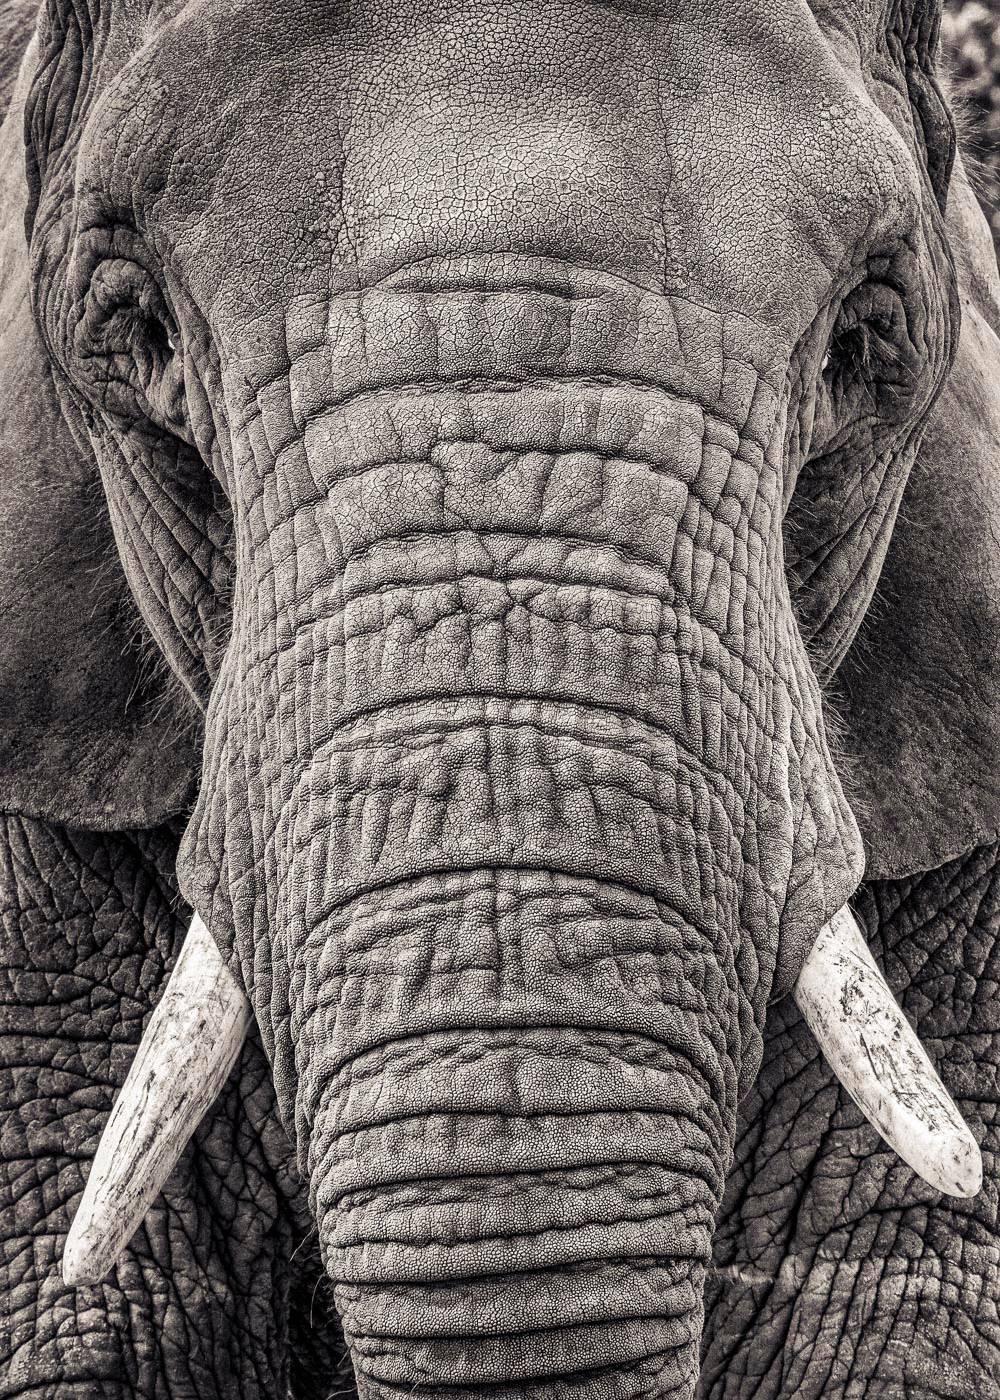 Paul Coghlin Black and White Photograph - Portrait of an Elephant III